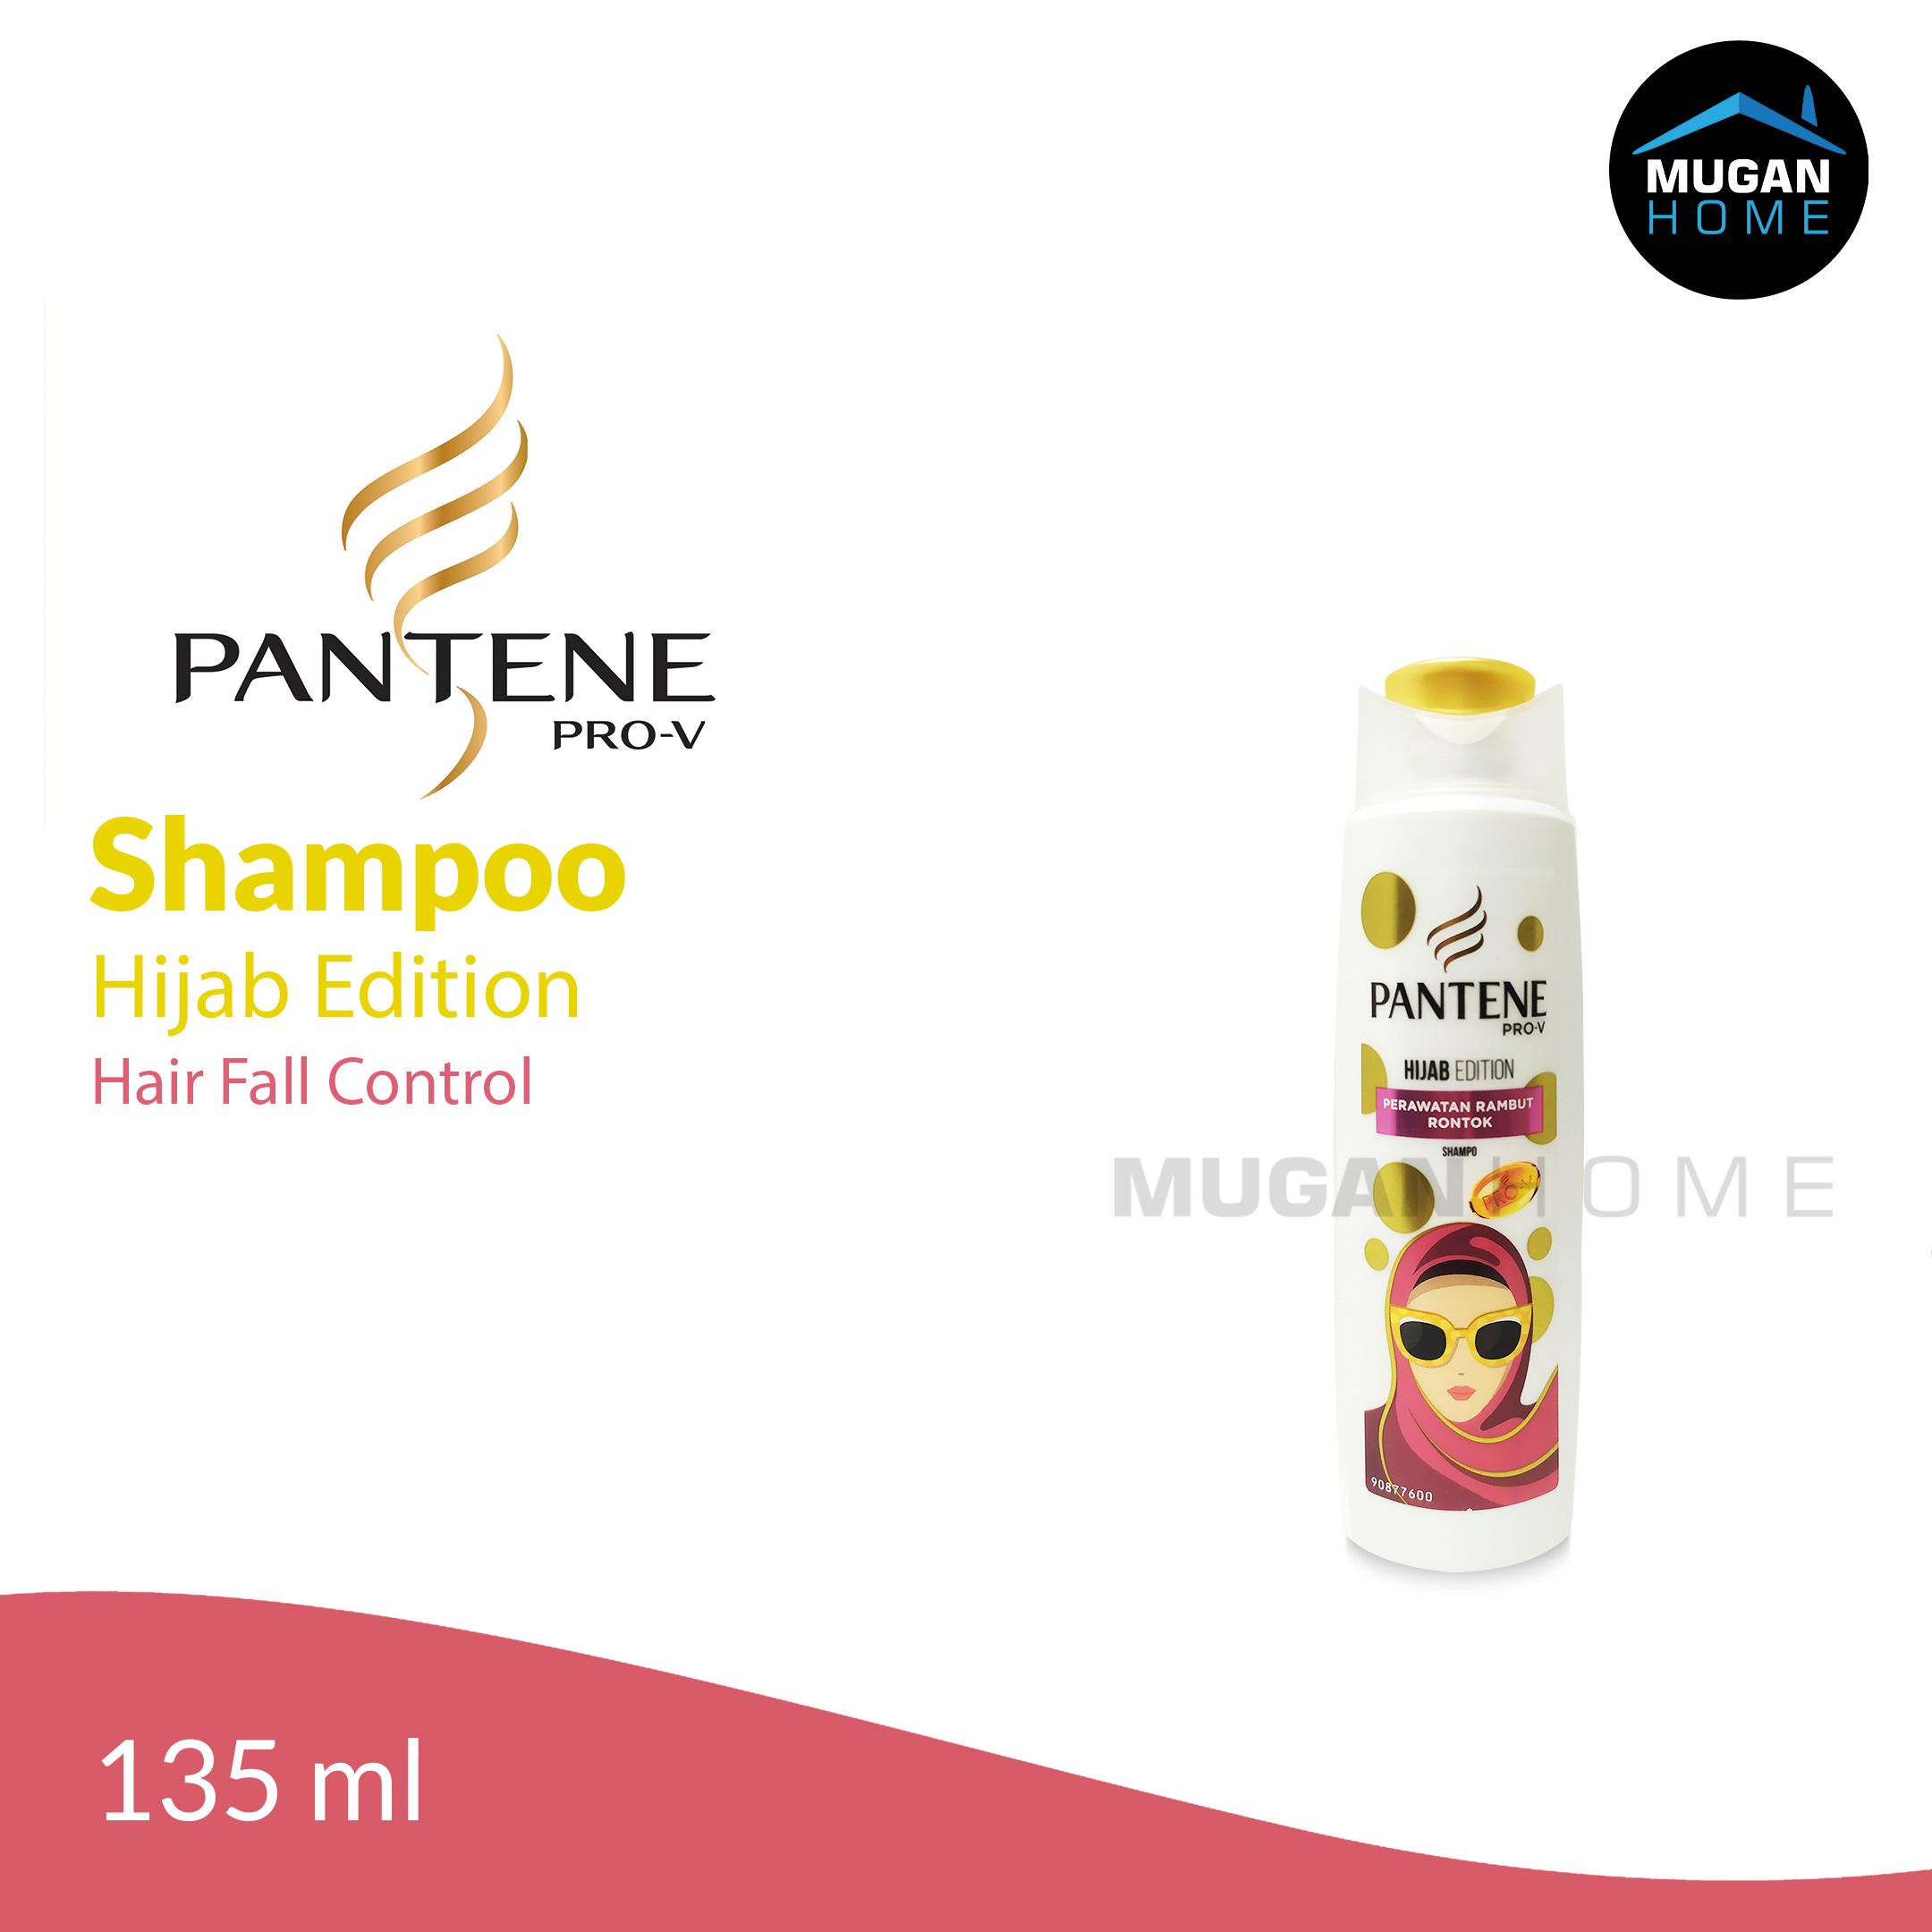 PANTENE SHAMPOO 135ML HAIR FALL CONTROL HIJAB EDITION 